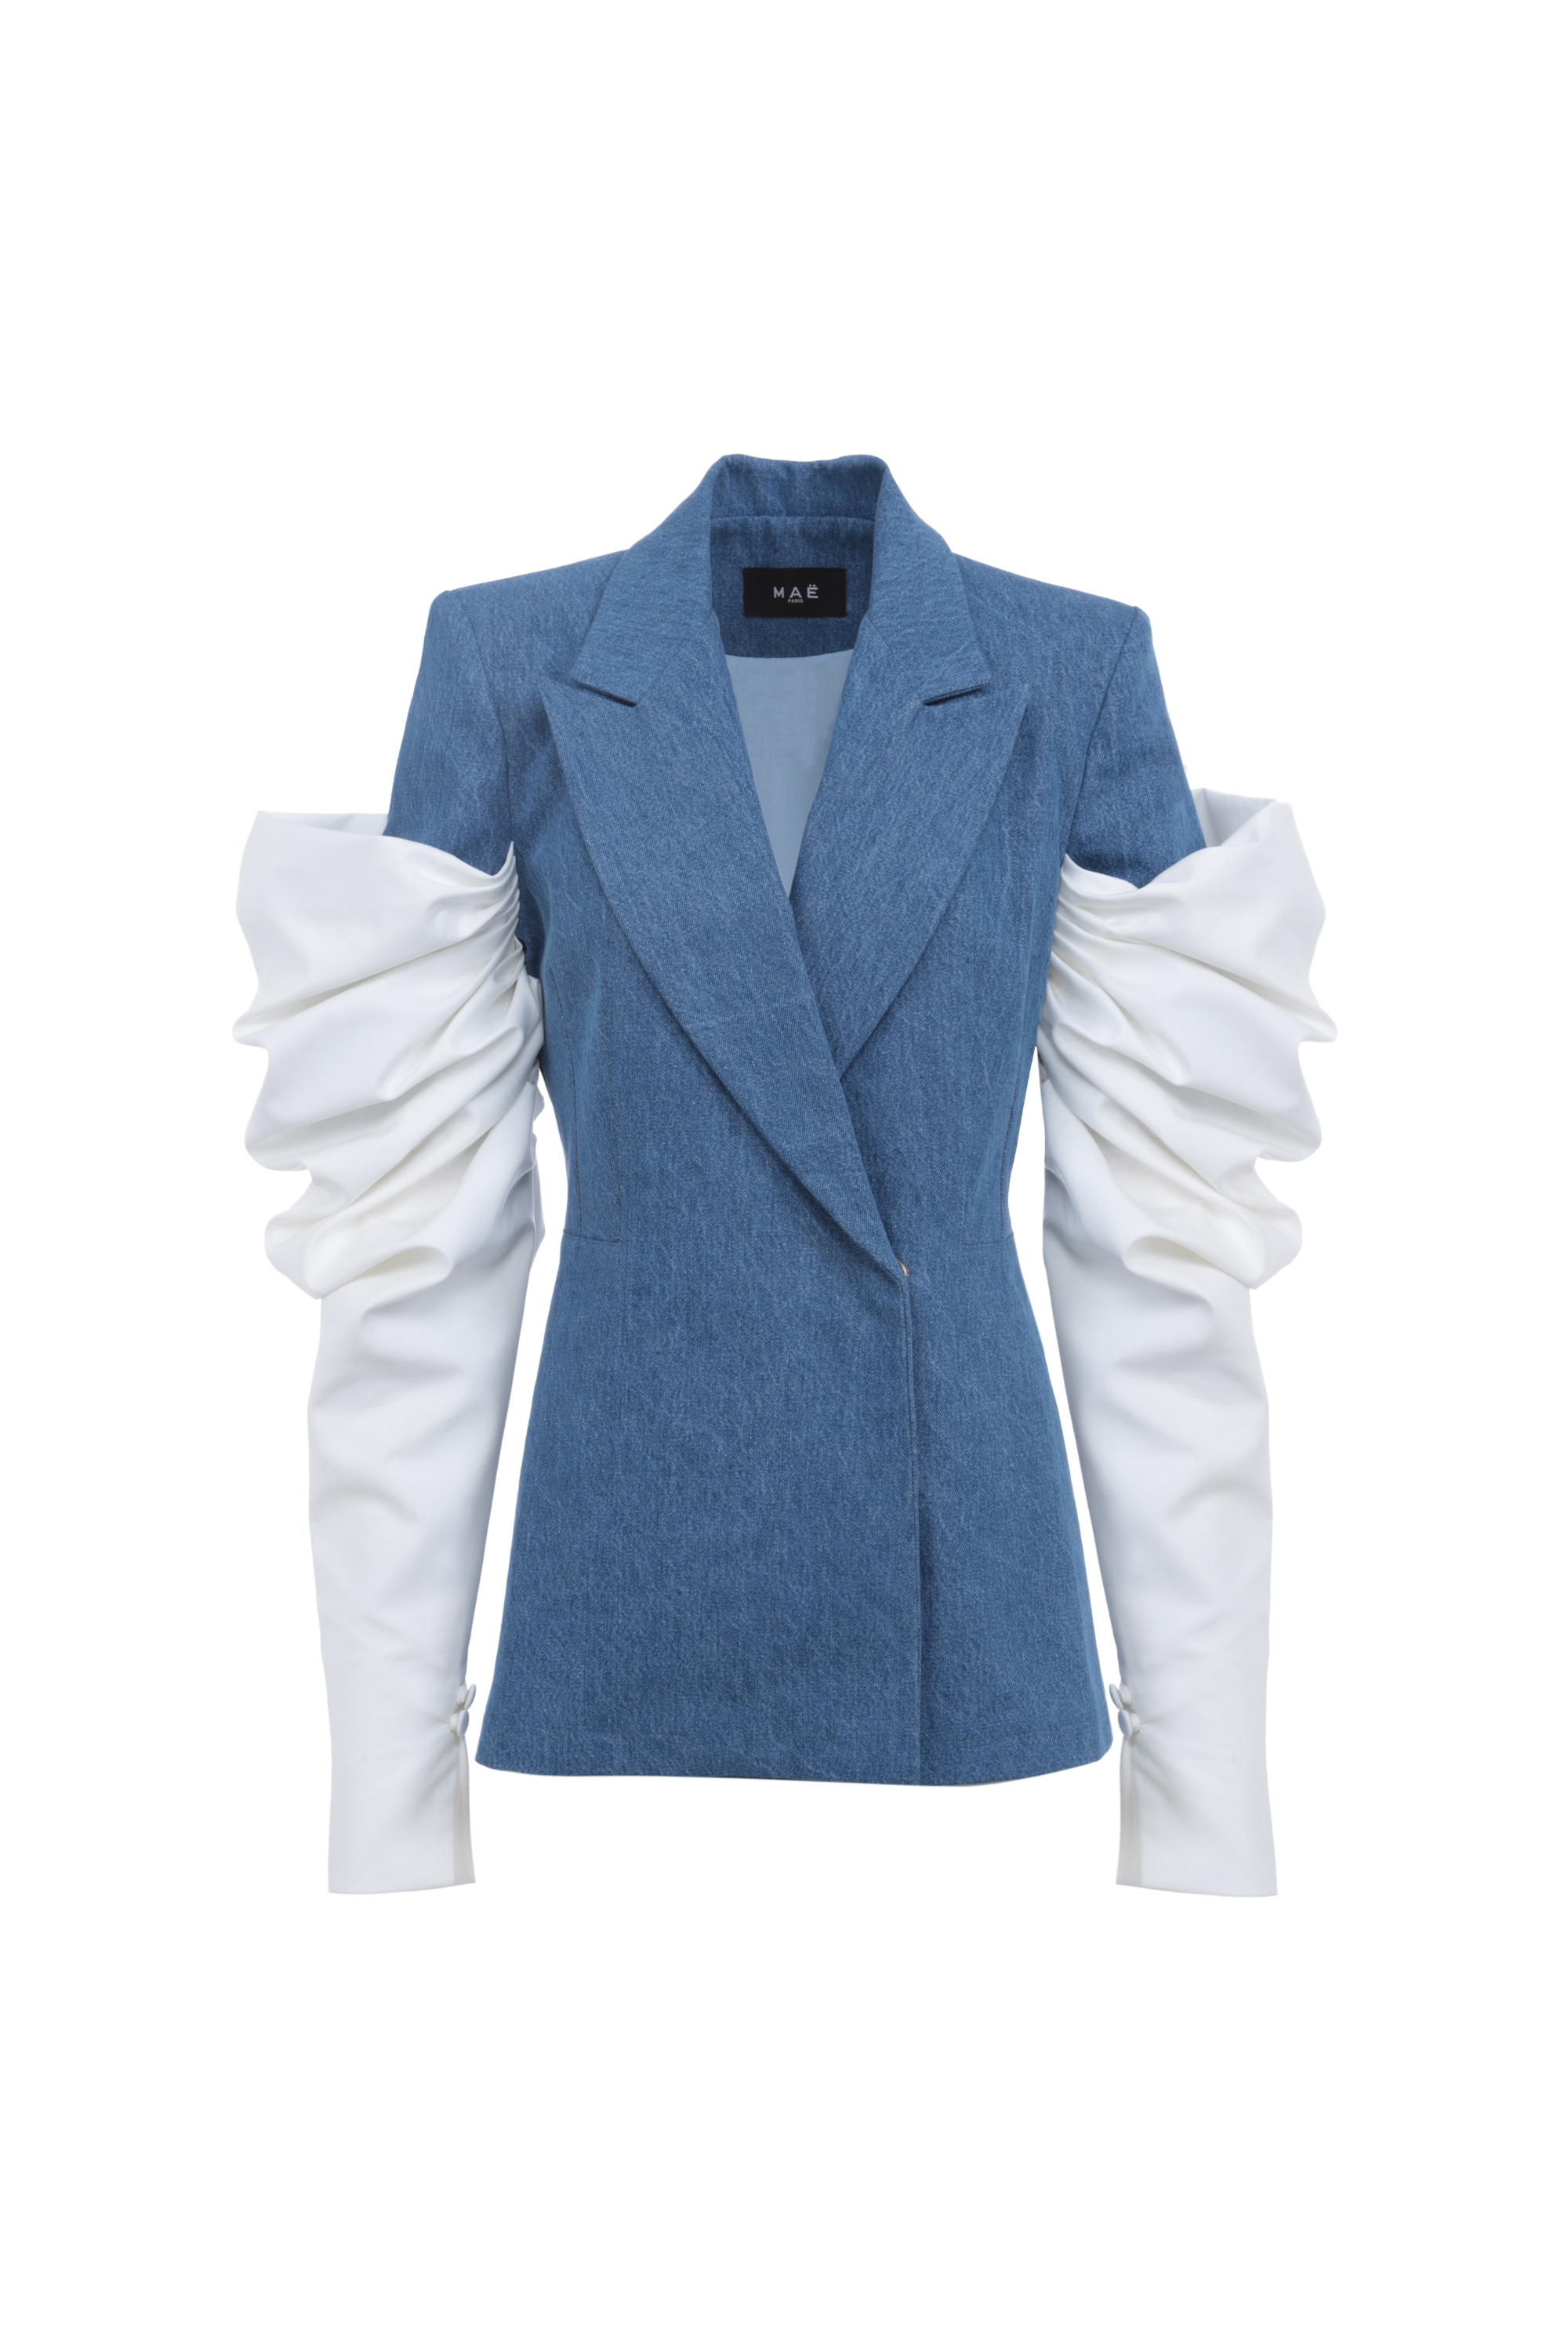 Assurance denim jacket with white sleeves